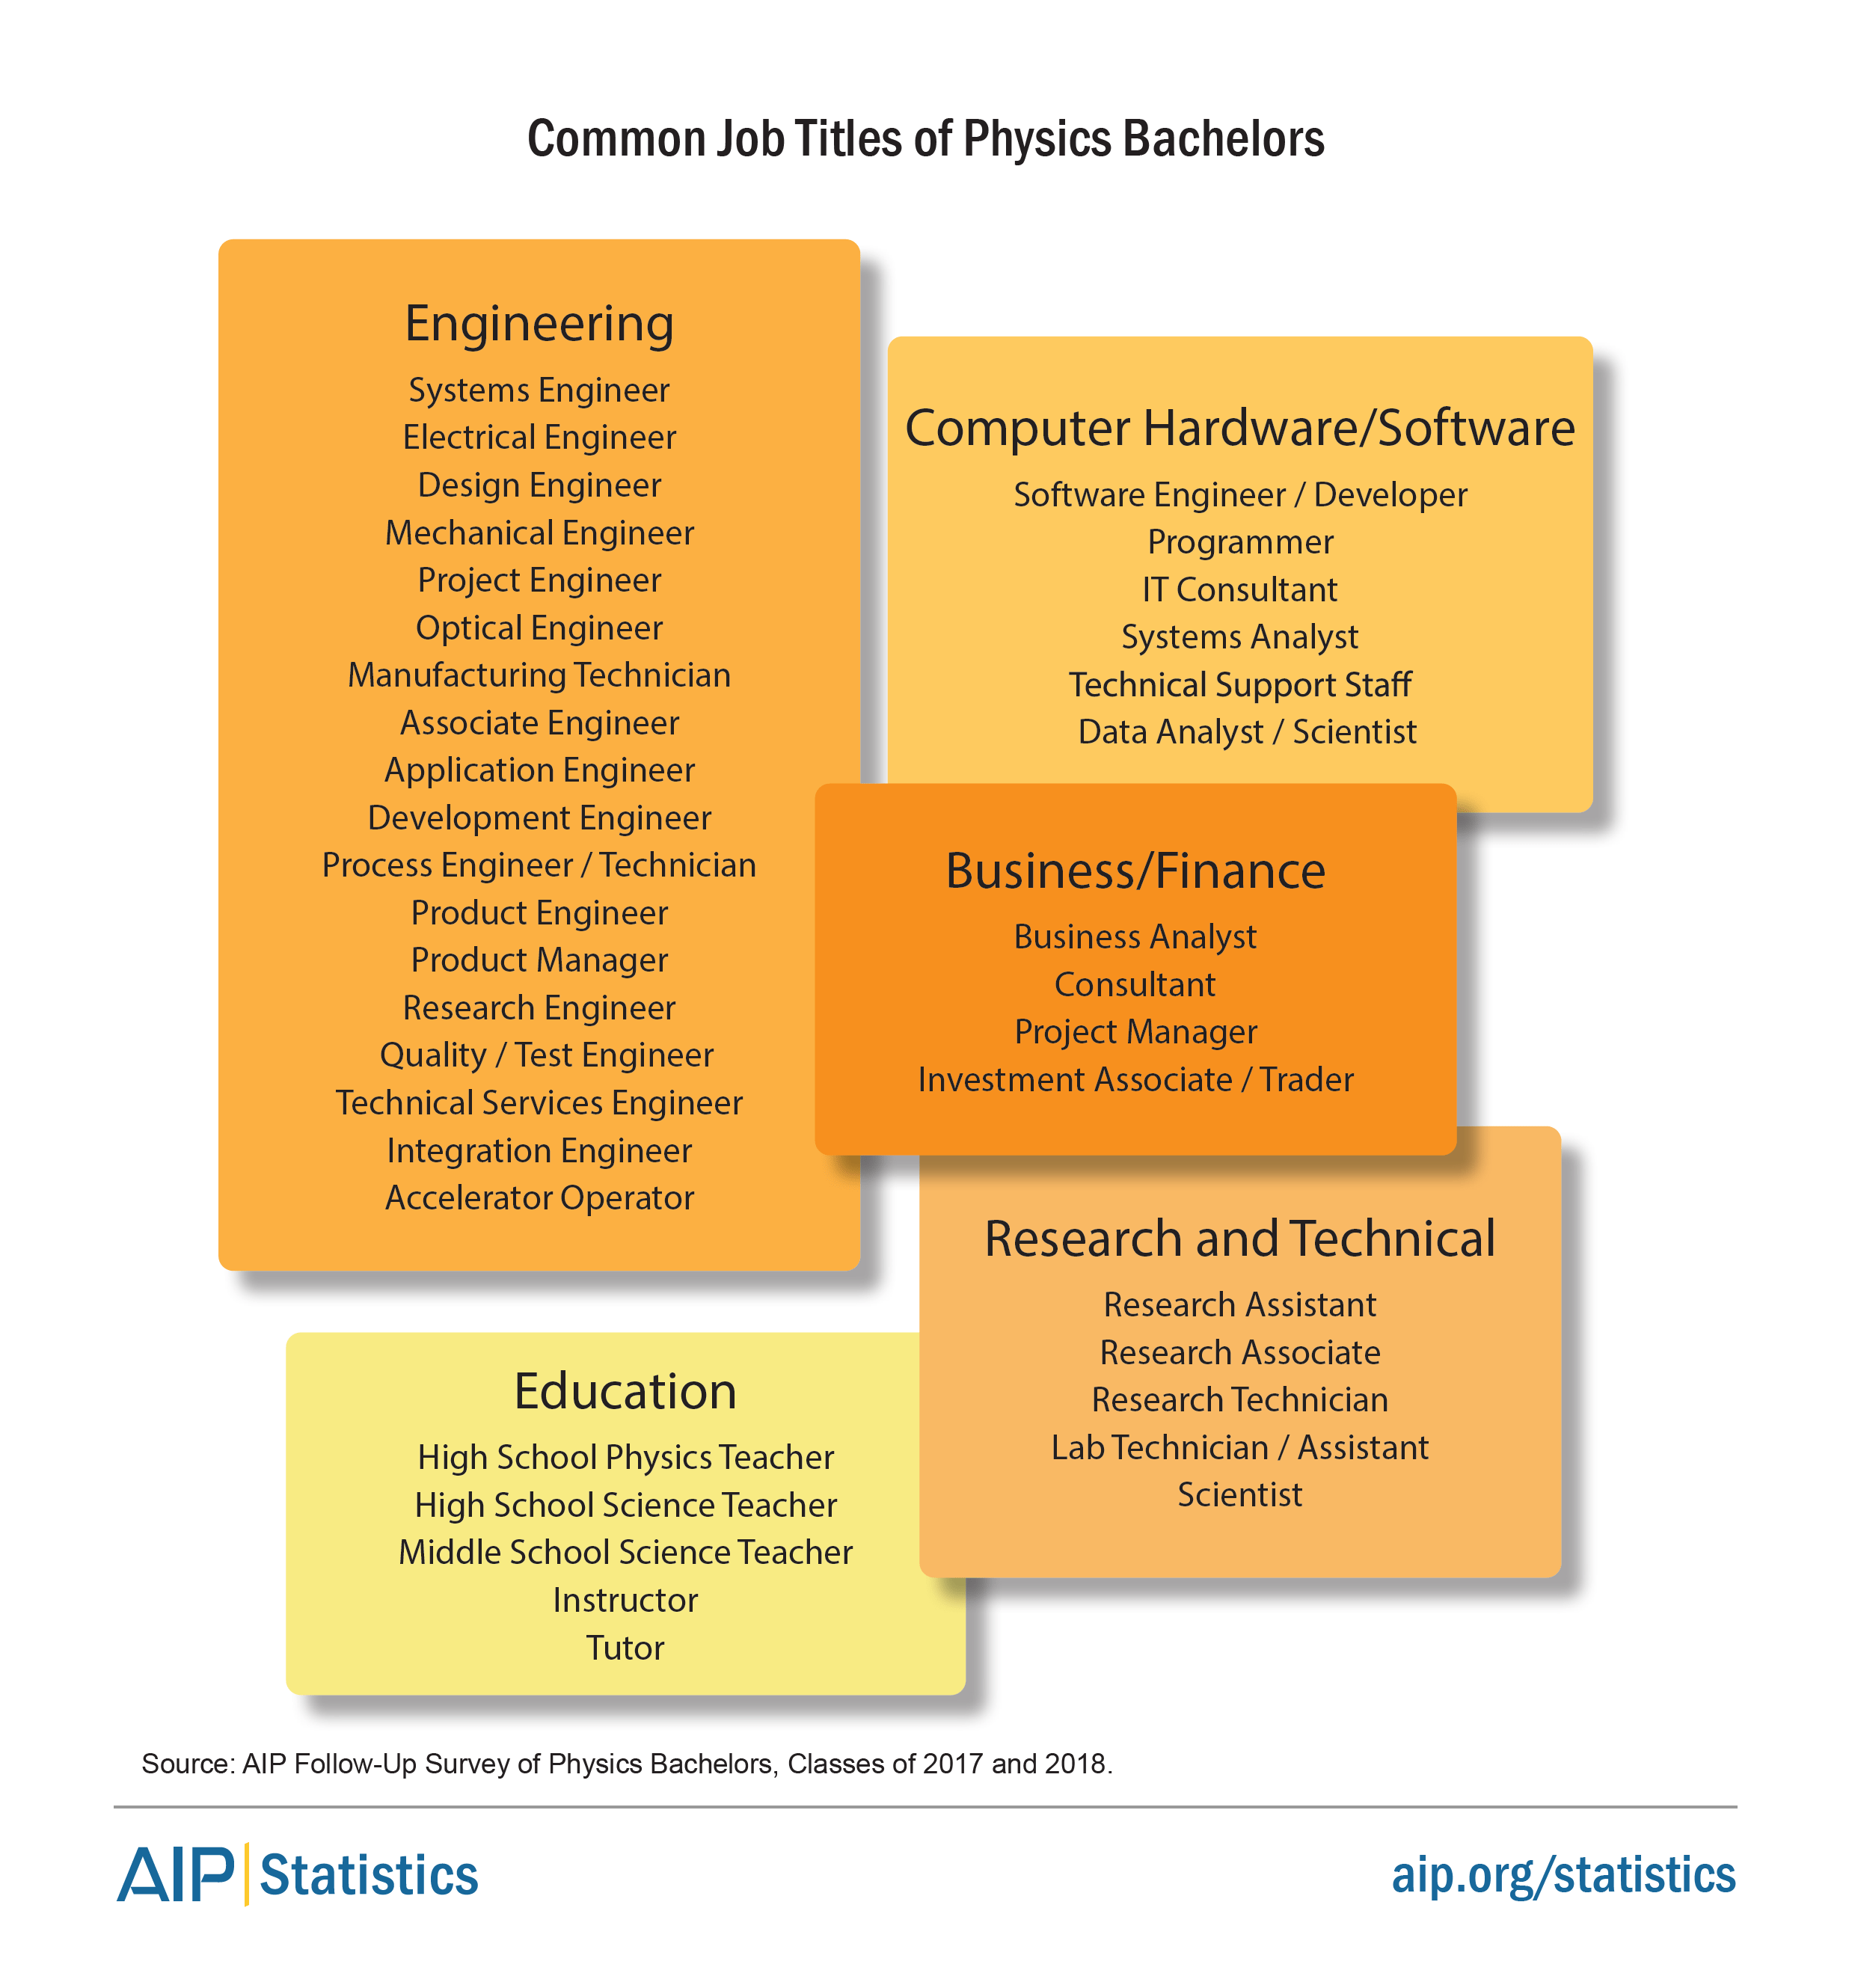 Common job titles of Physics Bachelors.